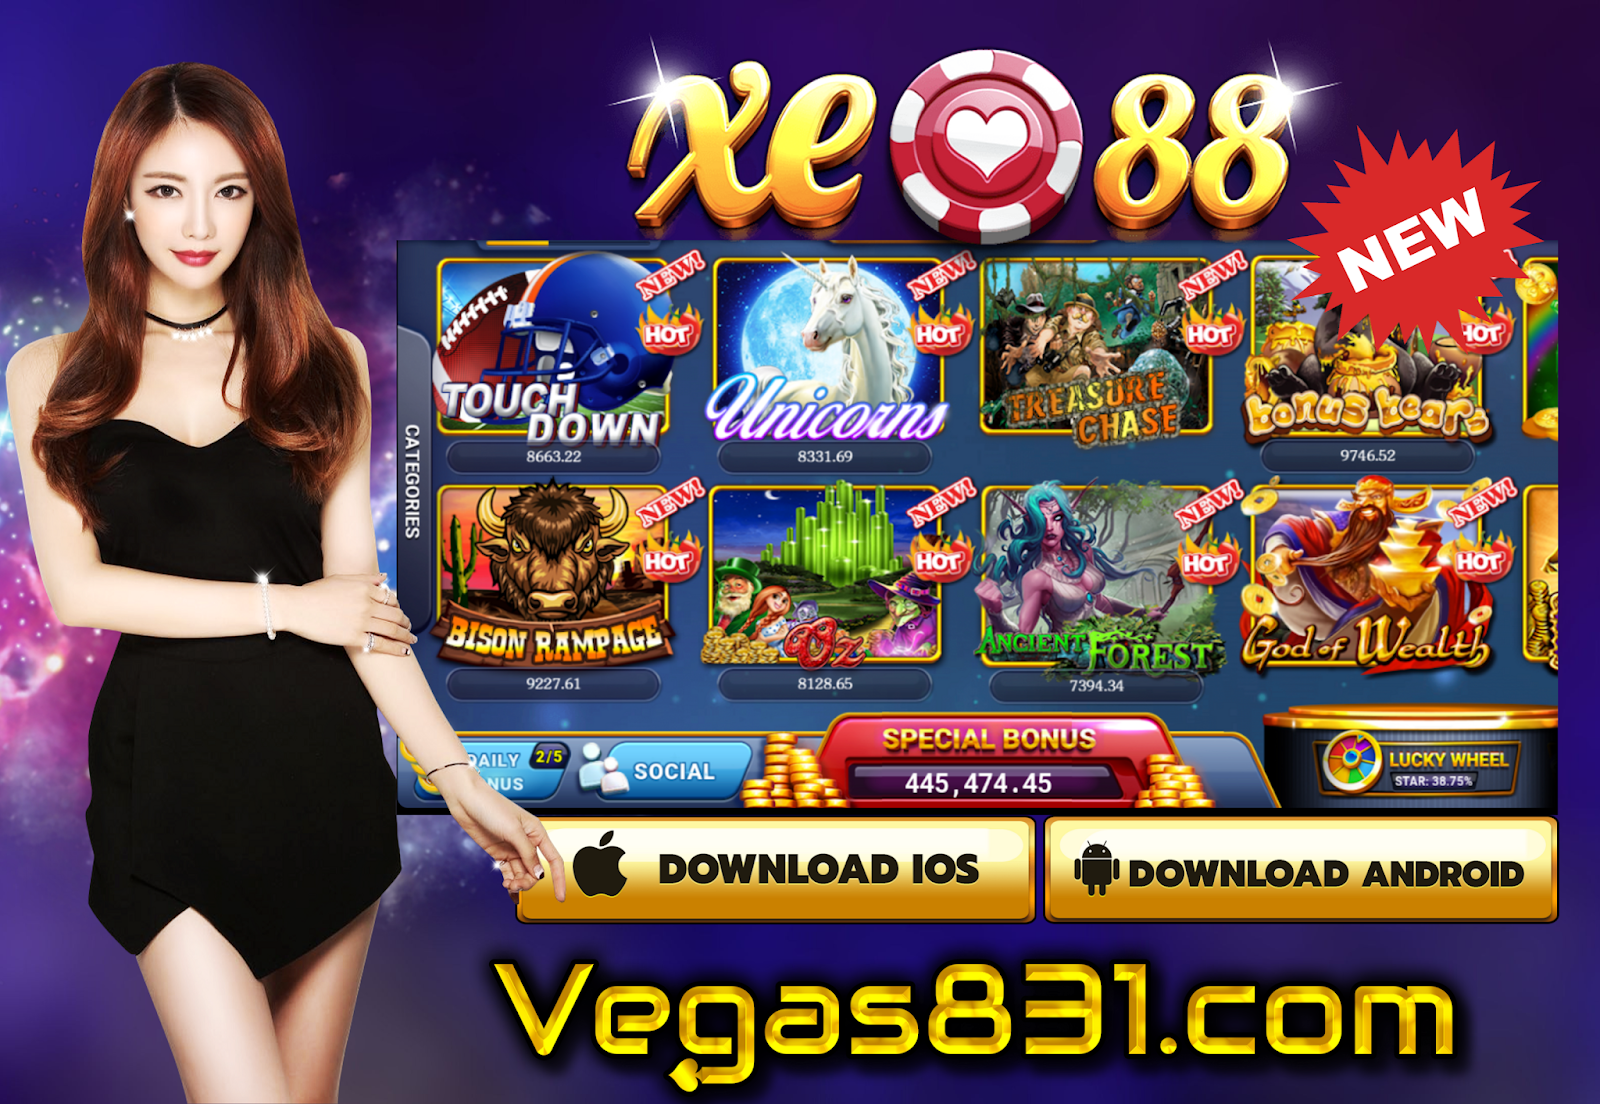 Xe88 Free Download apk - Vegas831 Malaysia Online Casino|en - Vegas831 ...